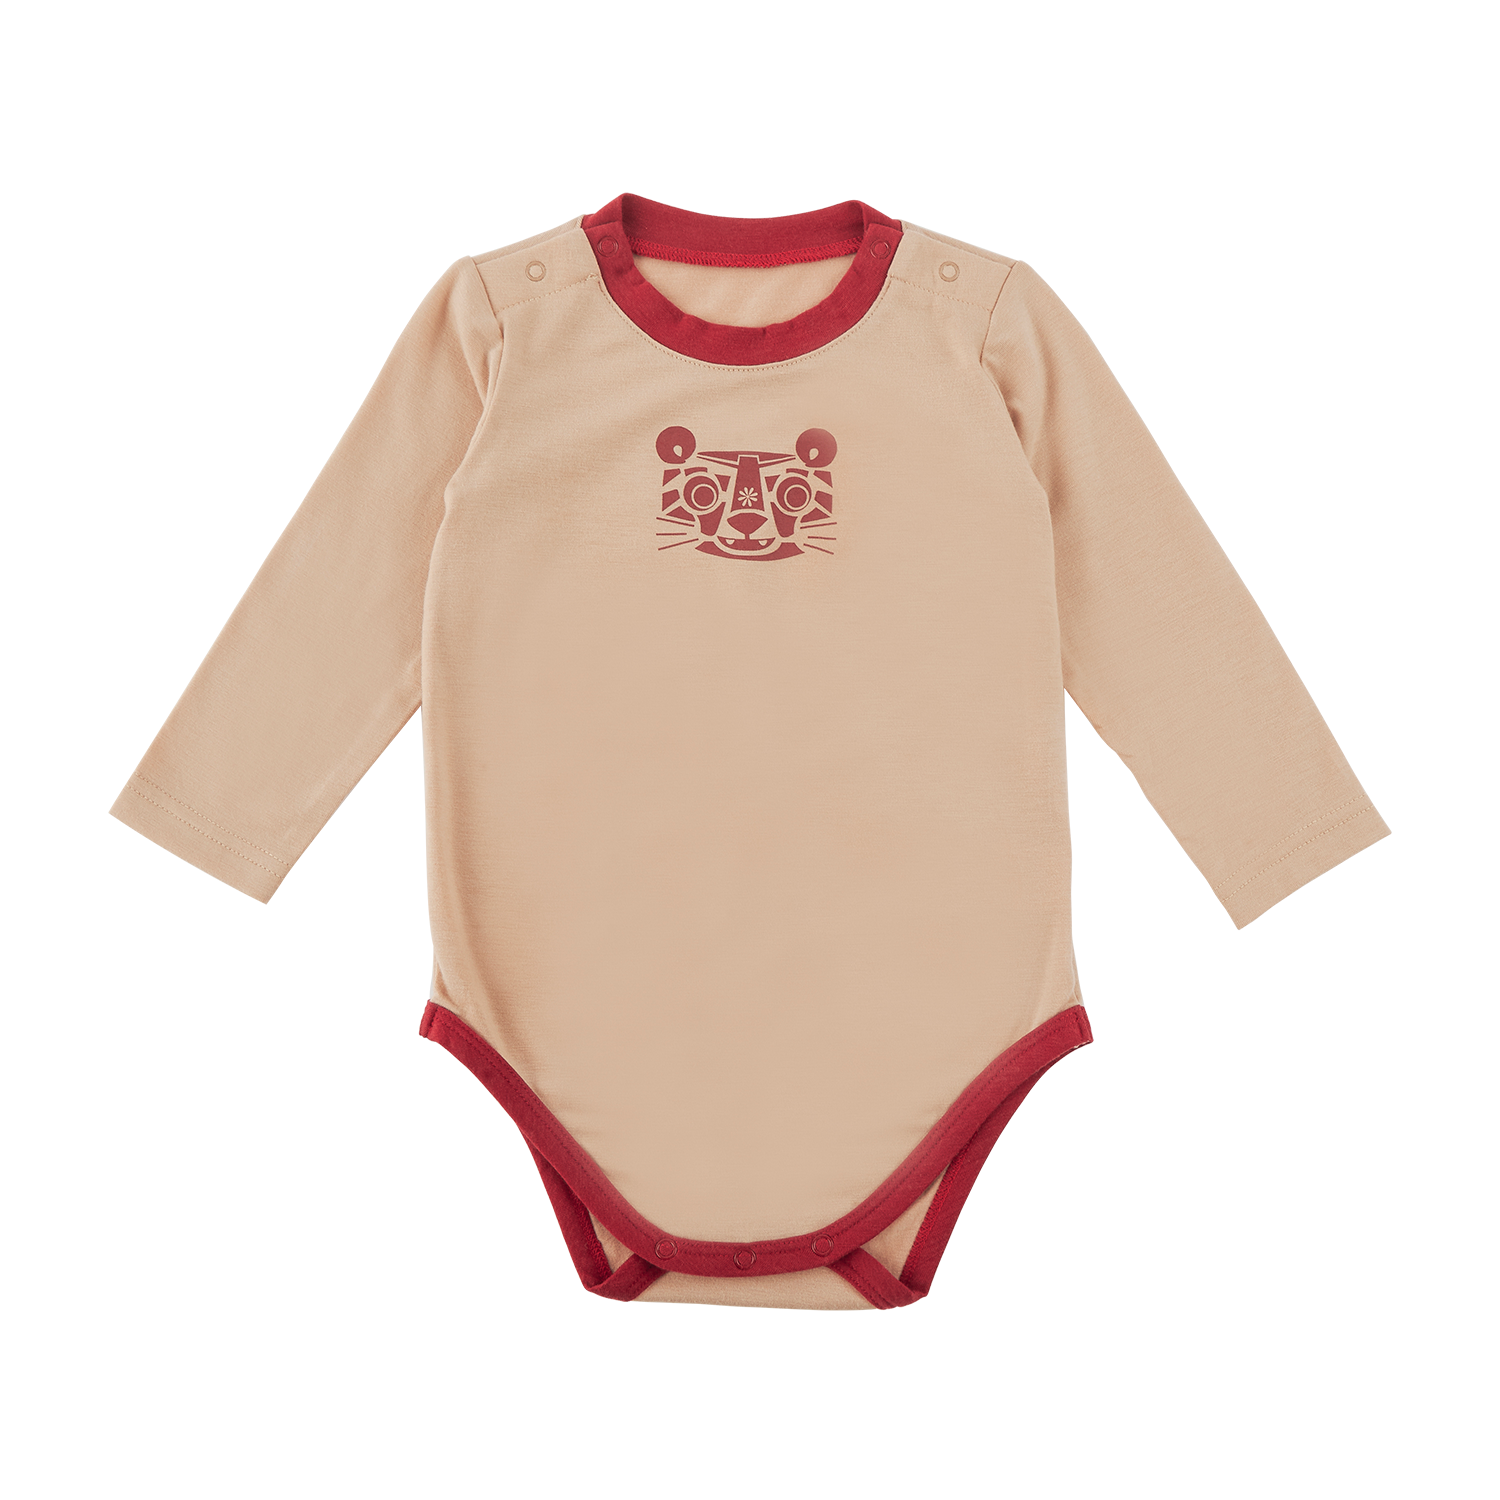 <tc>Khaki baby Thermal Bodysuit with tiger print</tc>